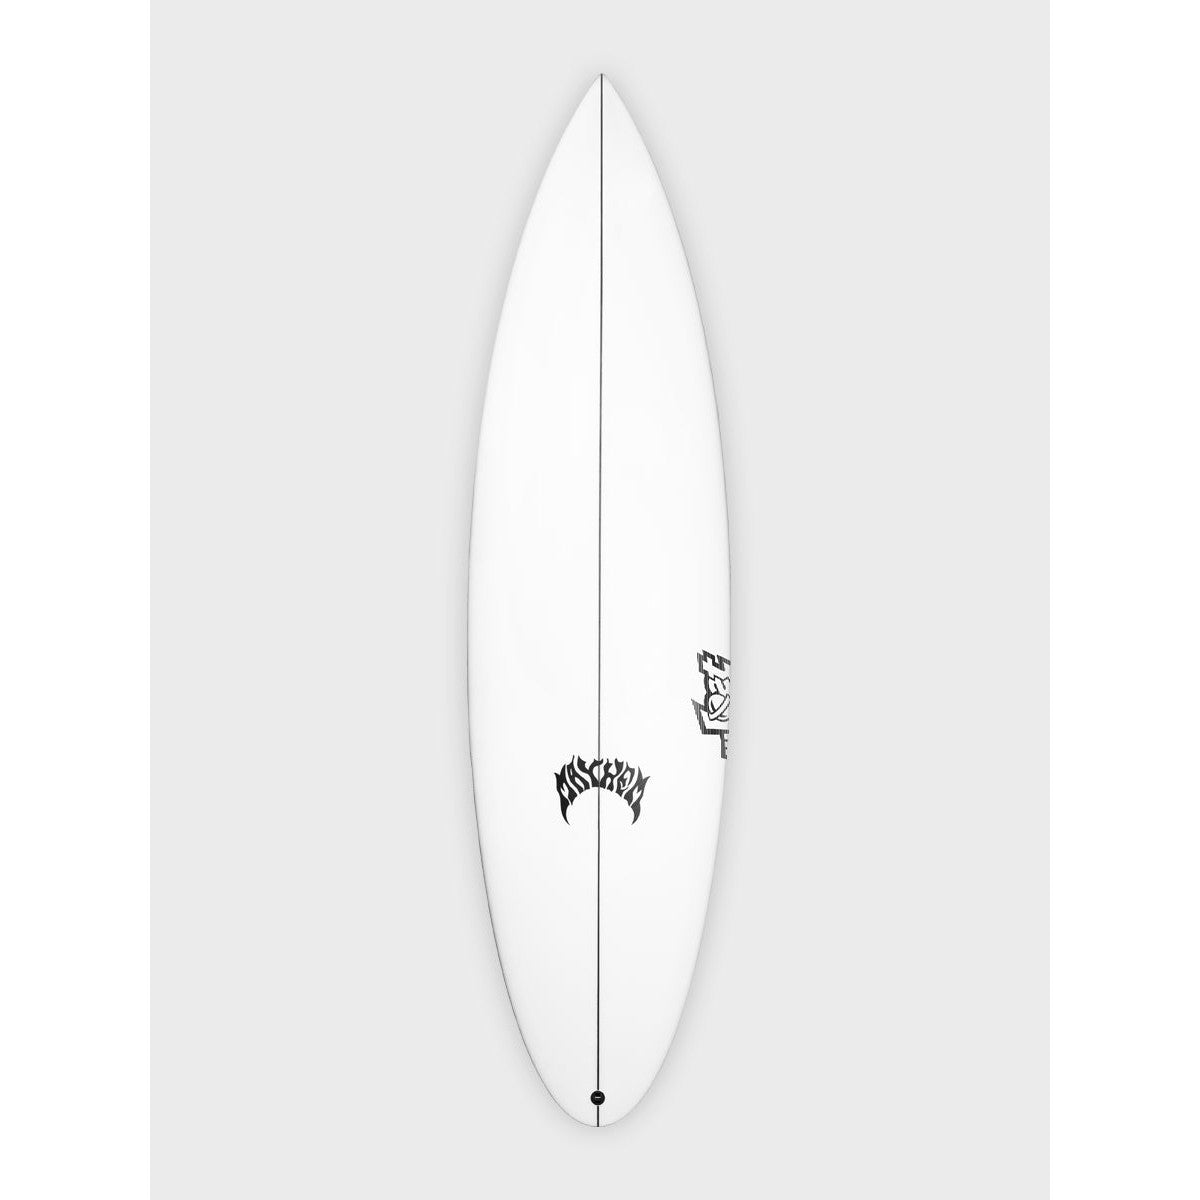 lost-surfboards-step-driver-galway-ireland-blacksheepsurfco-deck